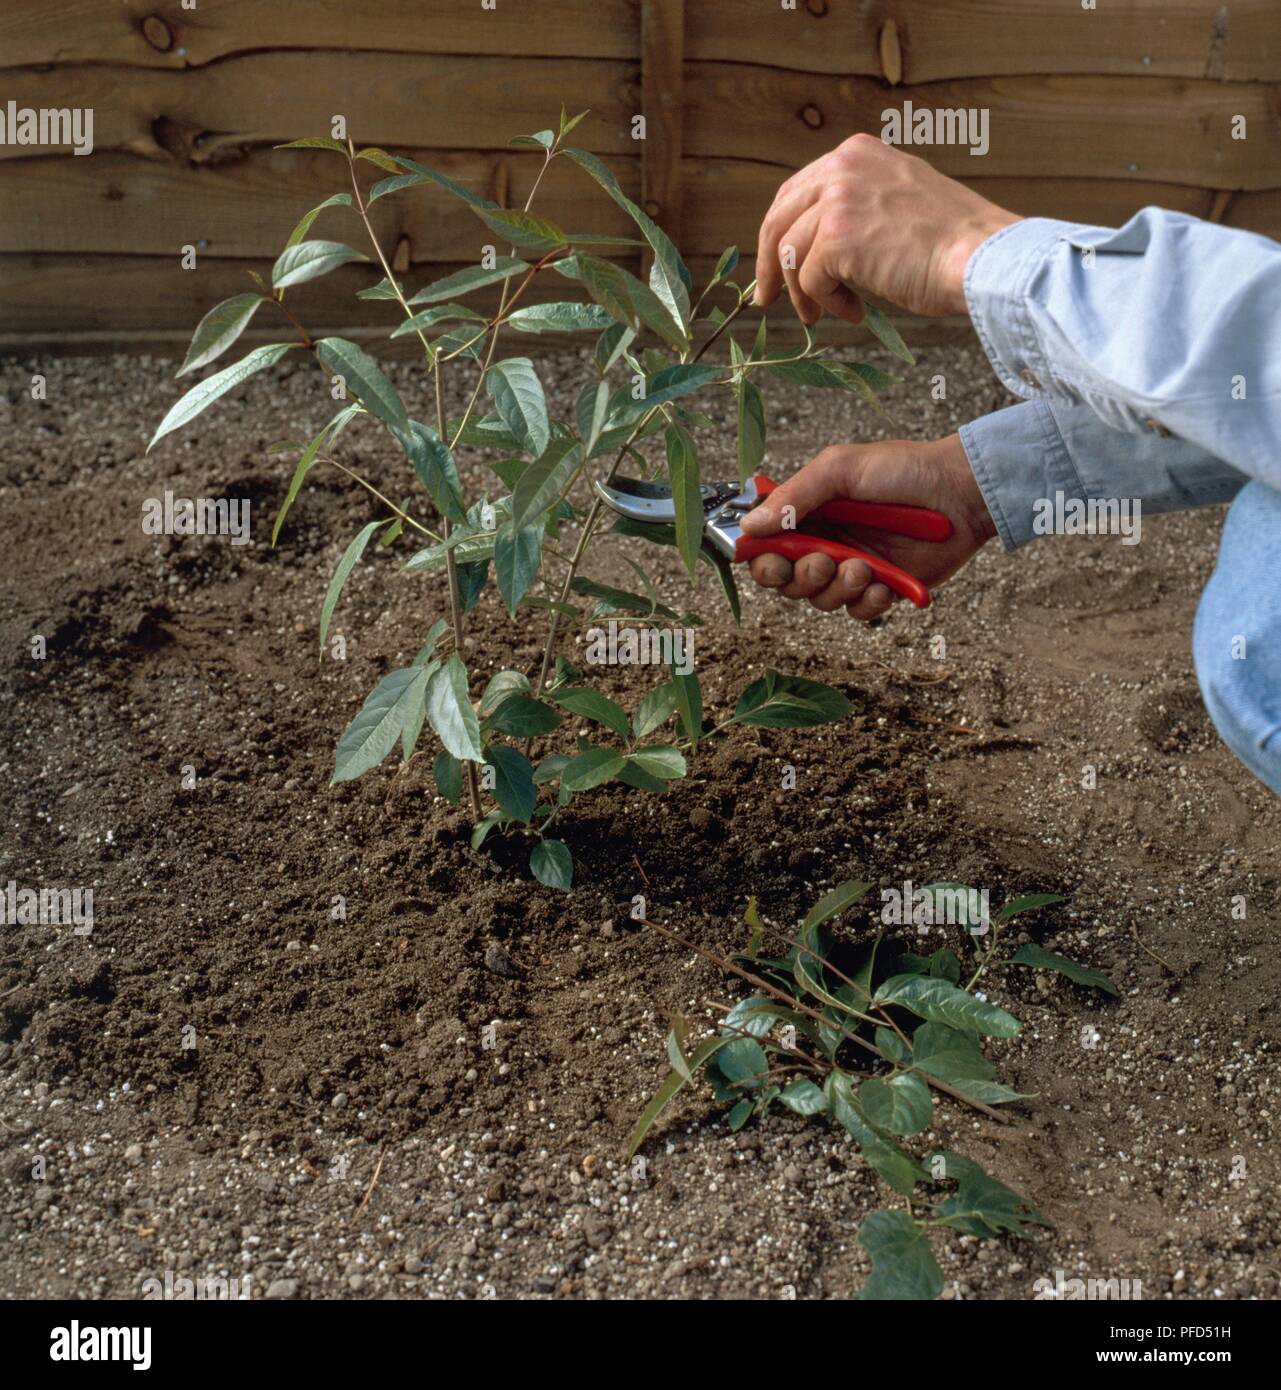 Man using secateurs to prune damaged or diseased Viburnam stems Stock Photo